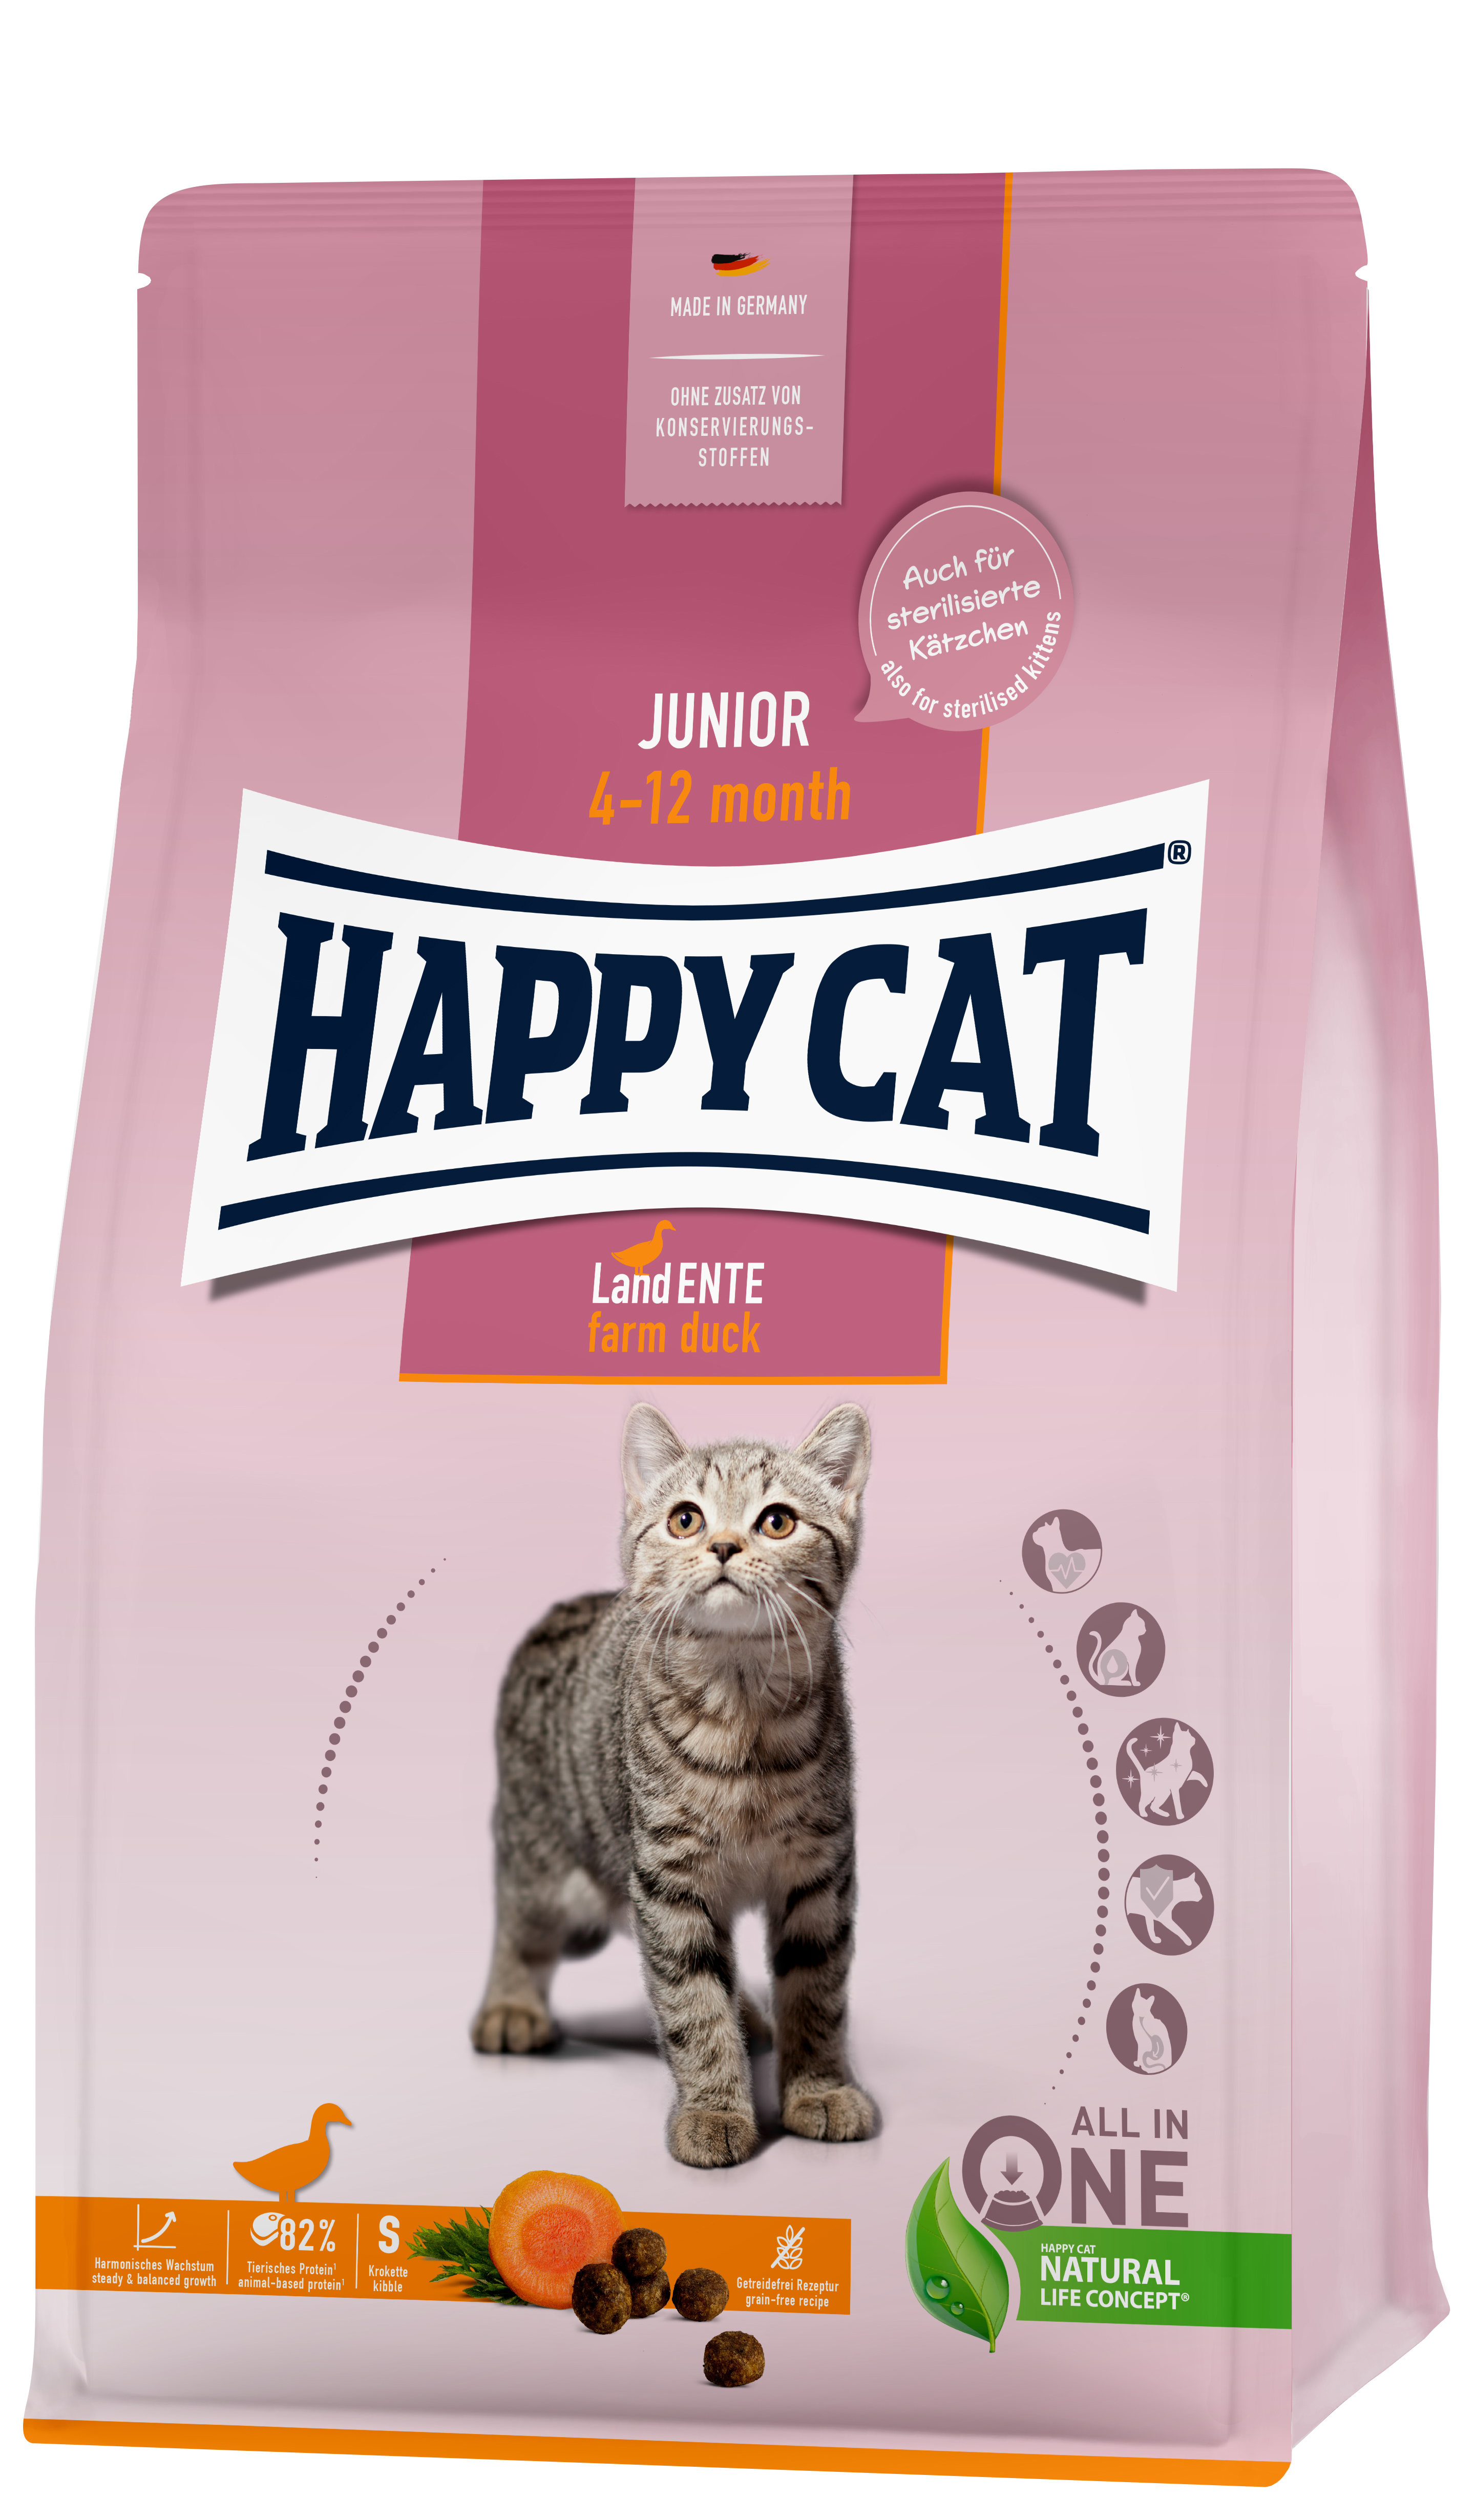 Happy Cat Young Junior Land Ente 1,3 kg